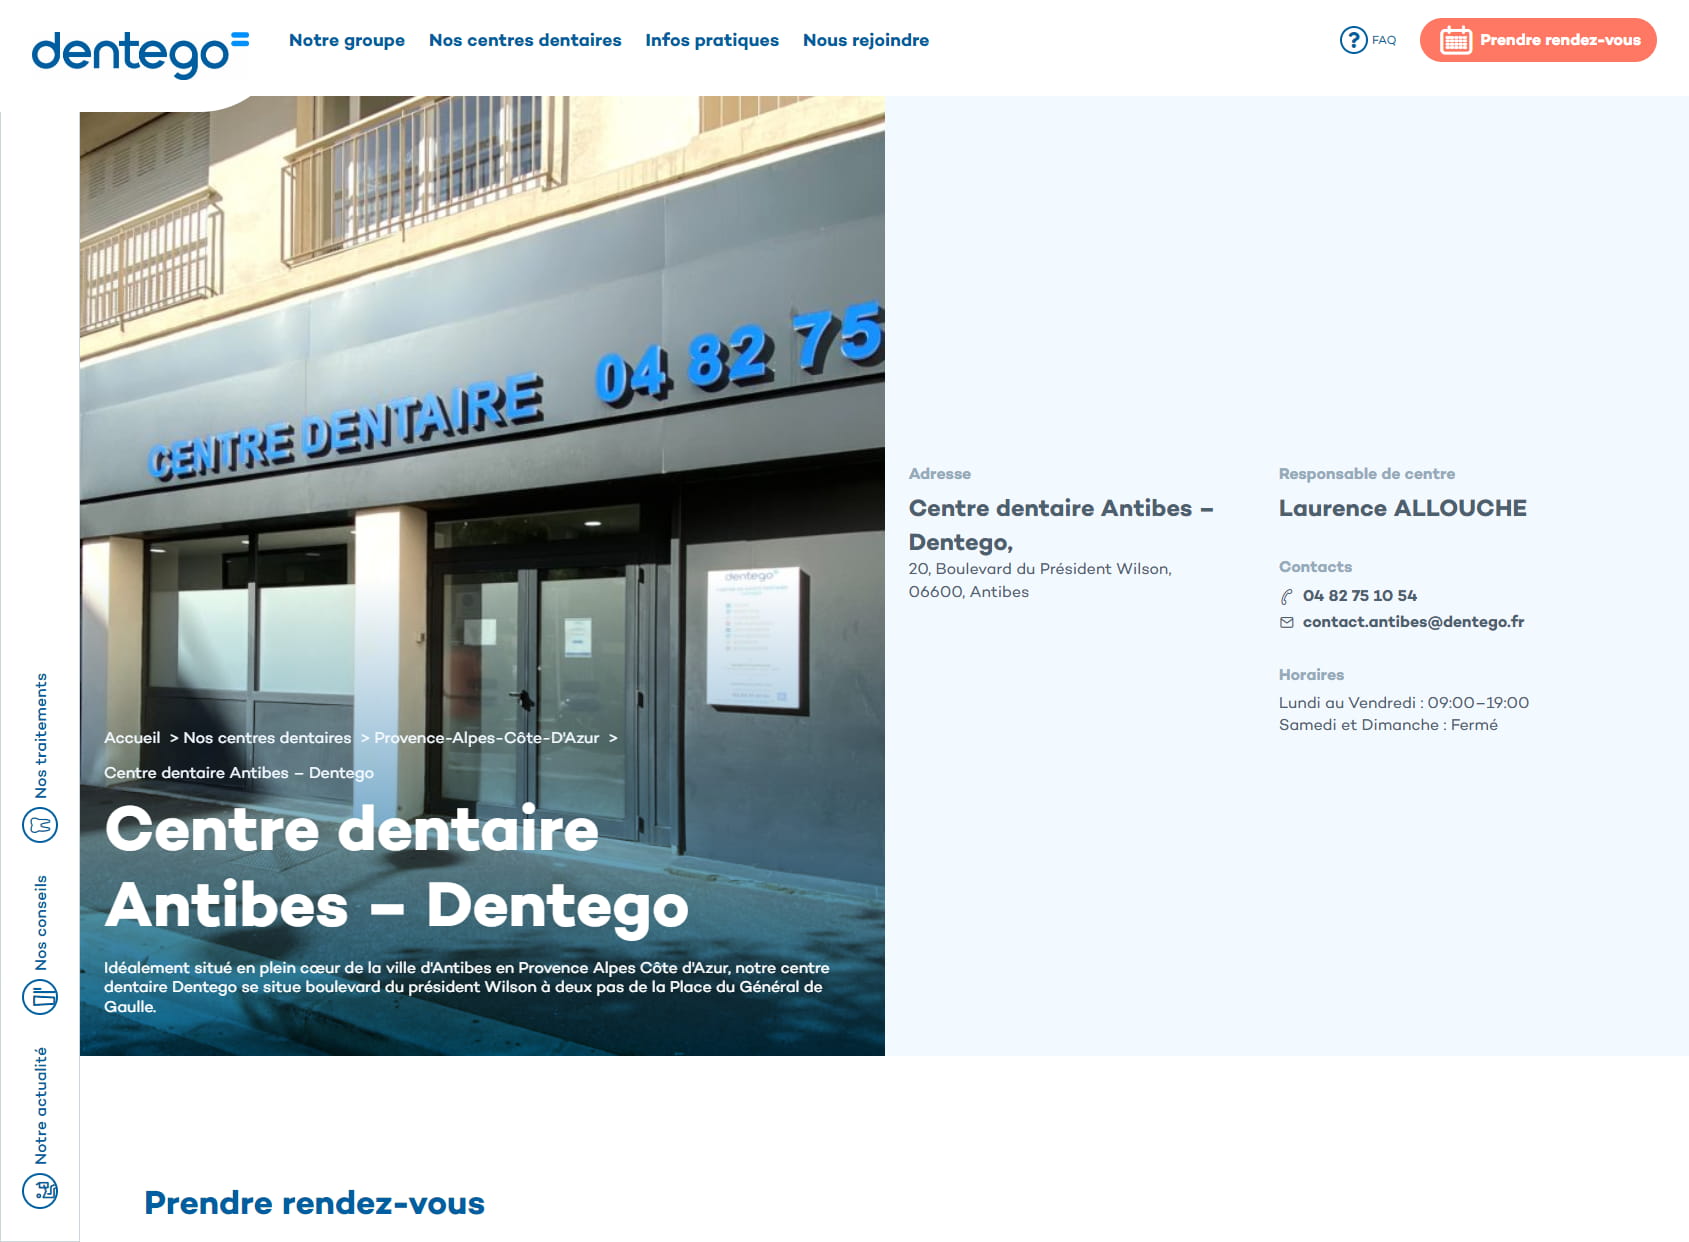 Centre Dentaire Antibes : Dentiste Antibes - Dentego